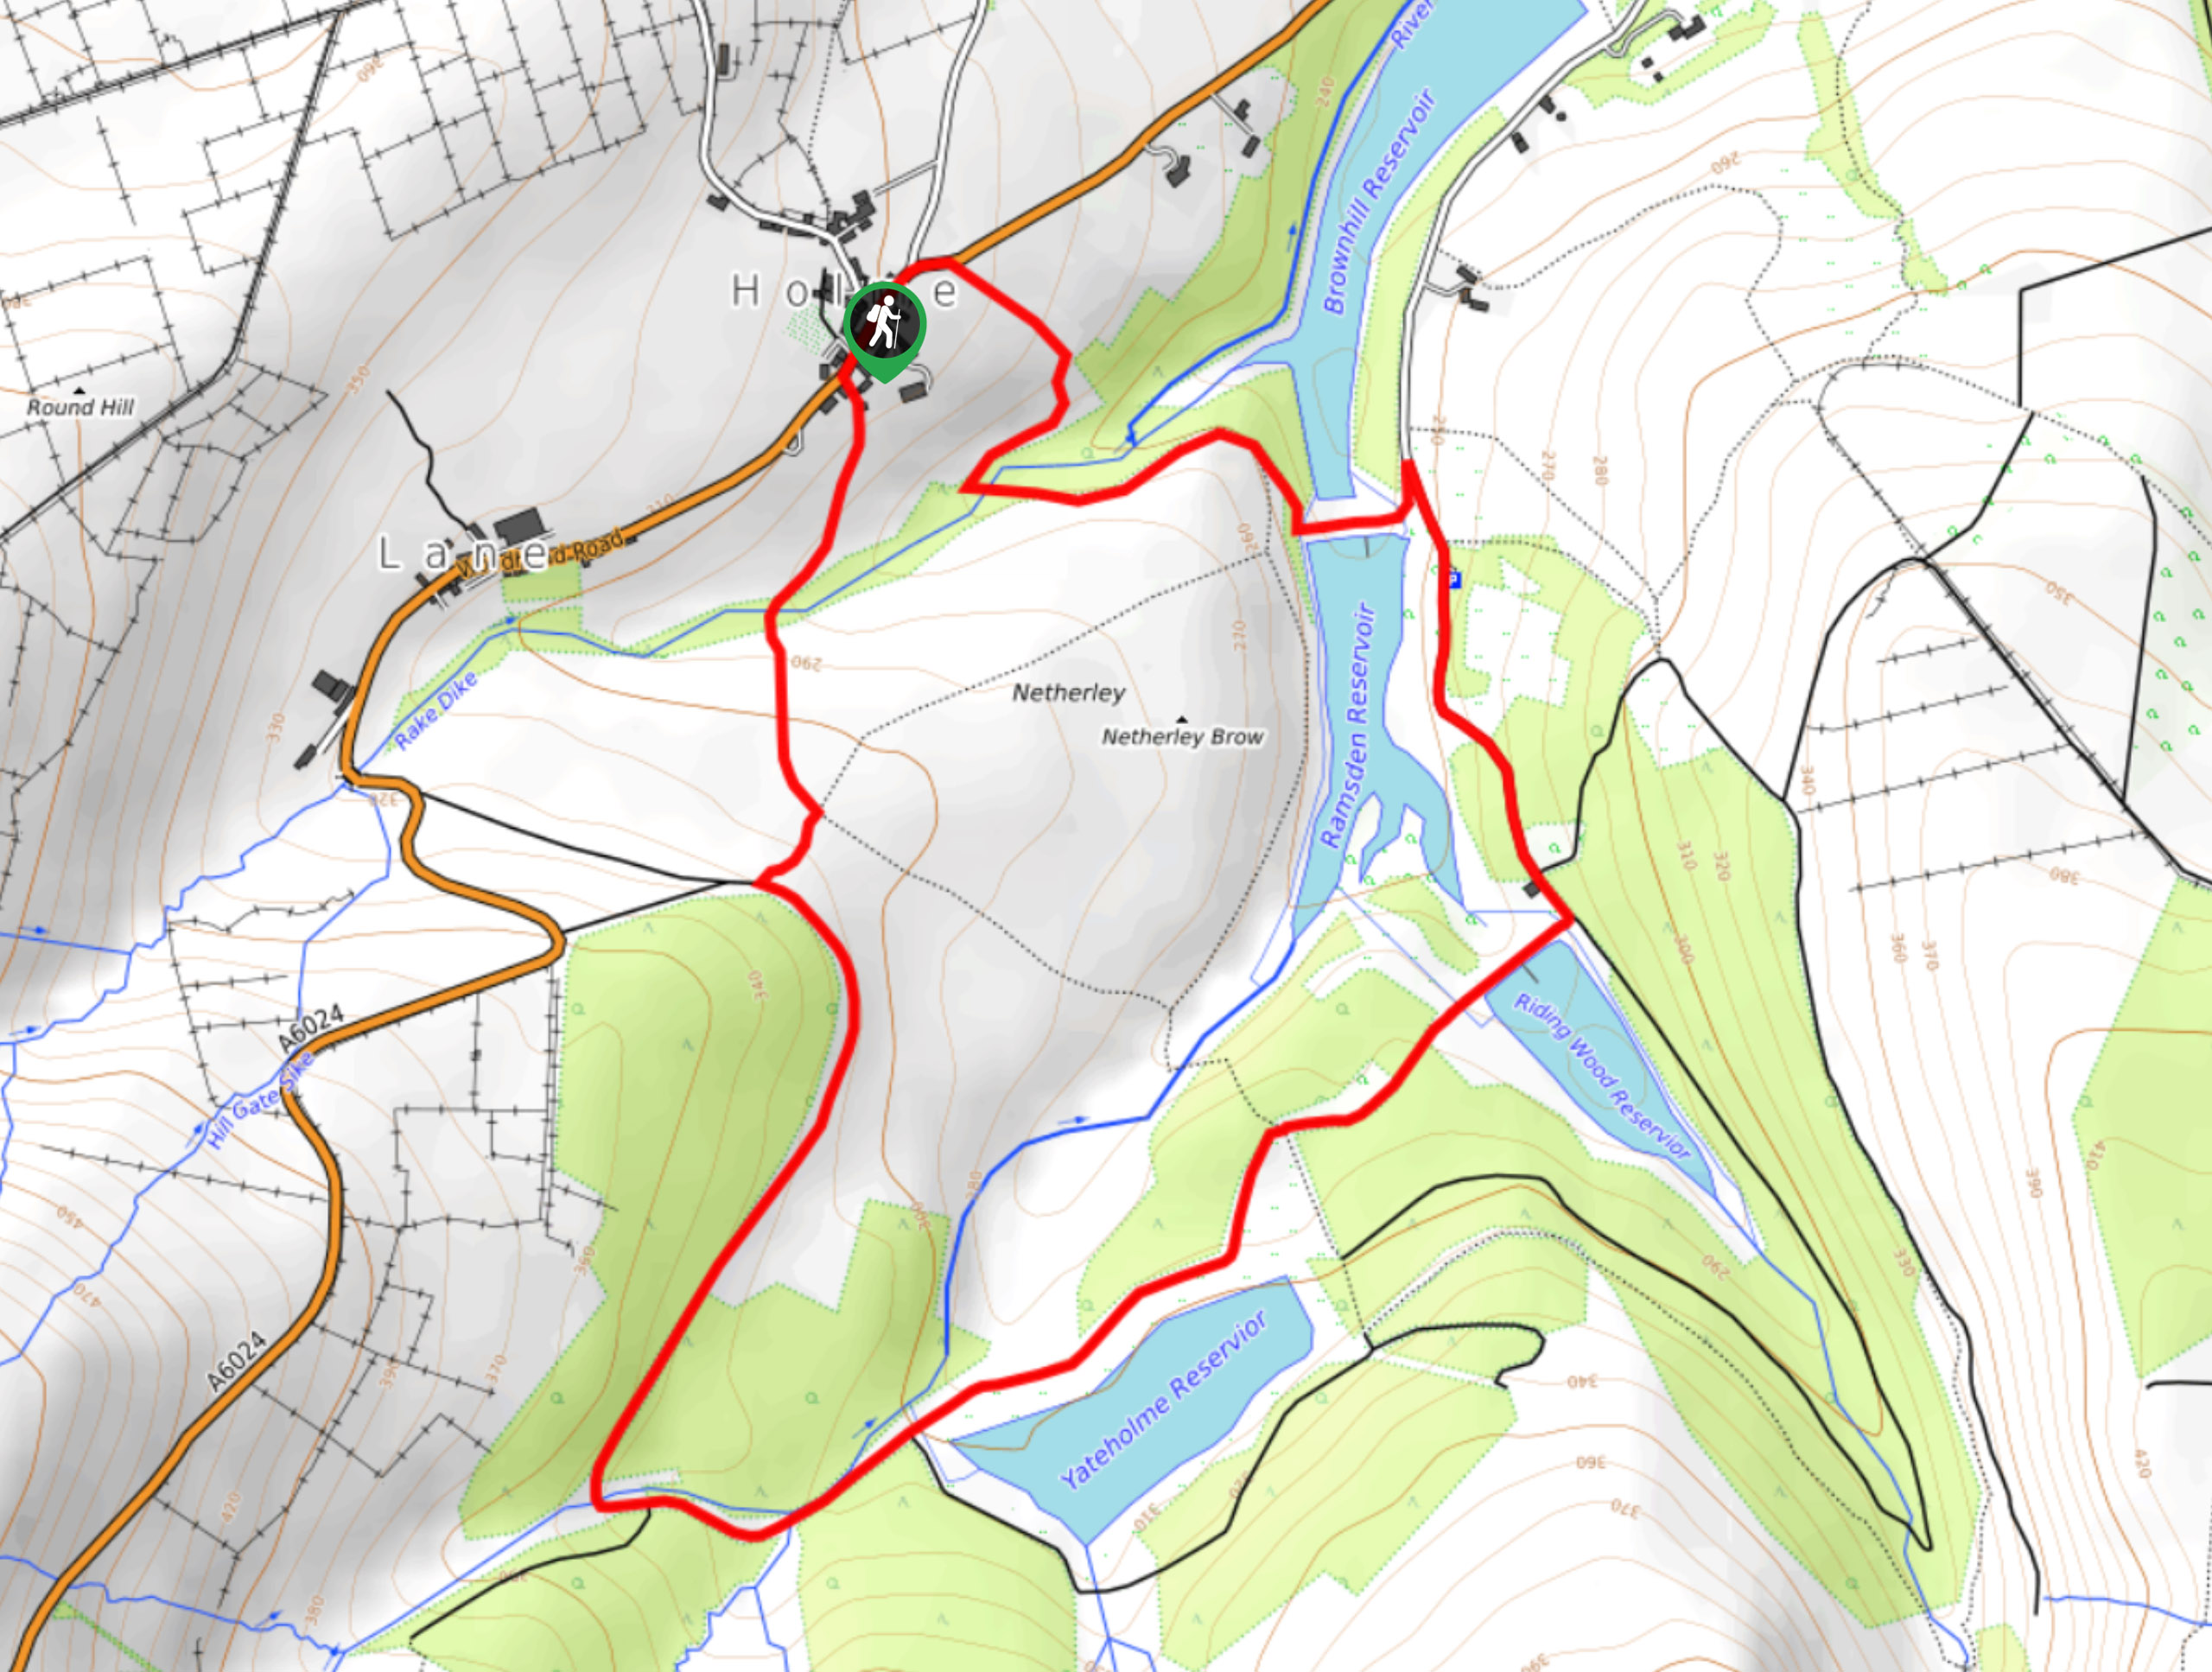 Netherley Brow Circular Walk Map